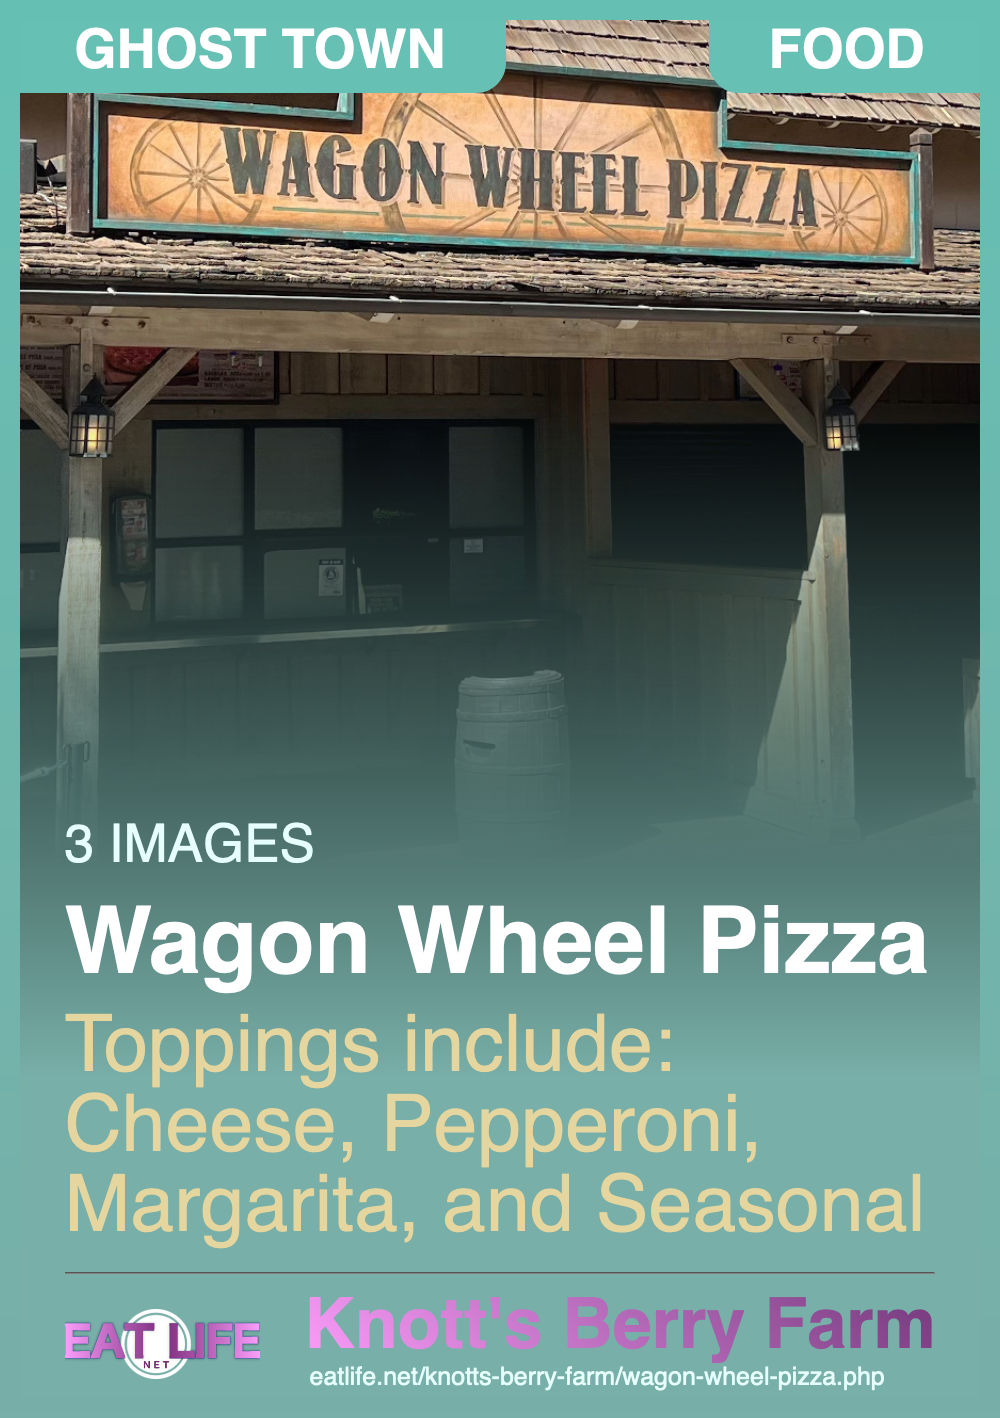 Wagon Wheel Pizza